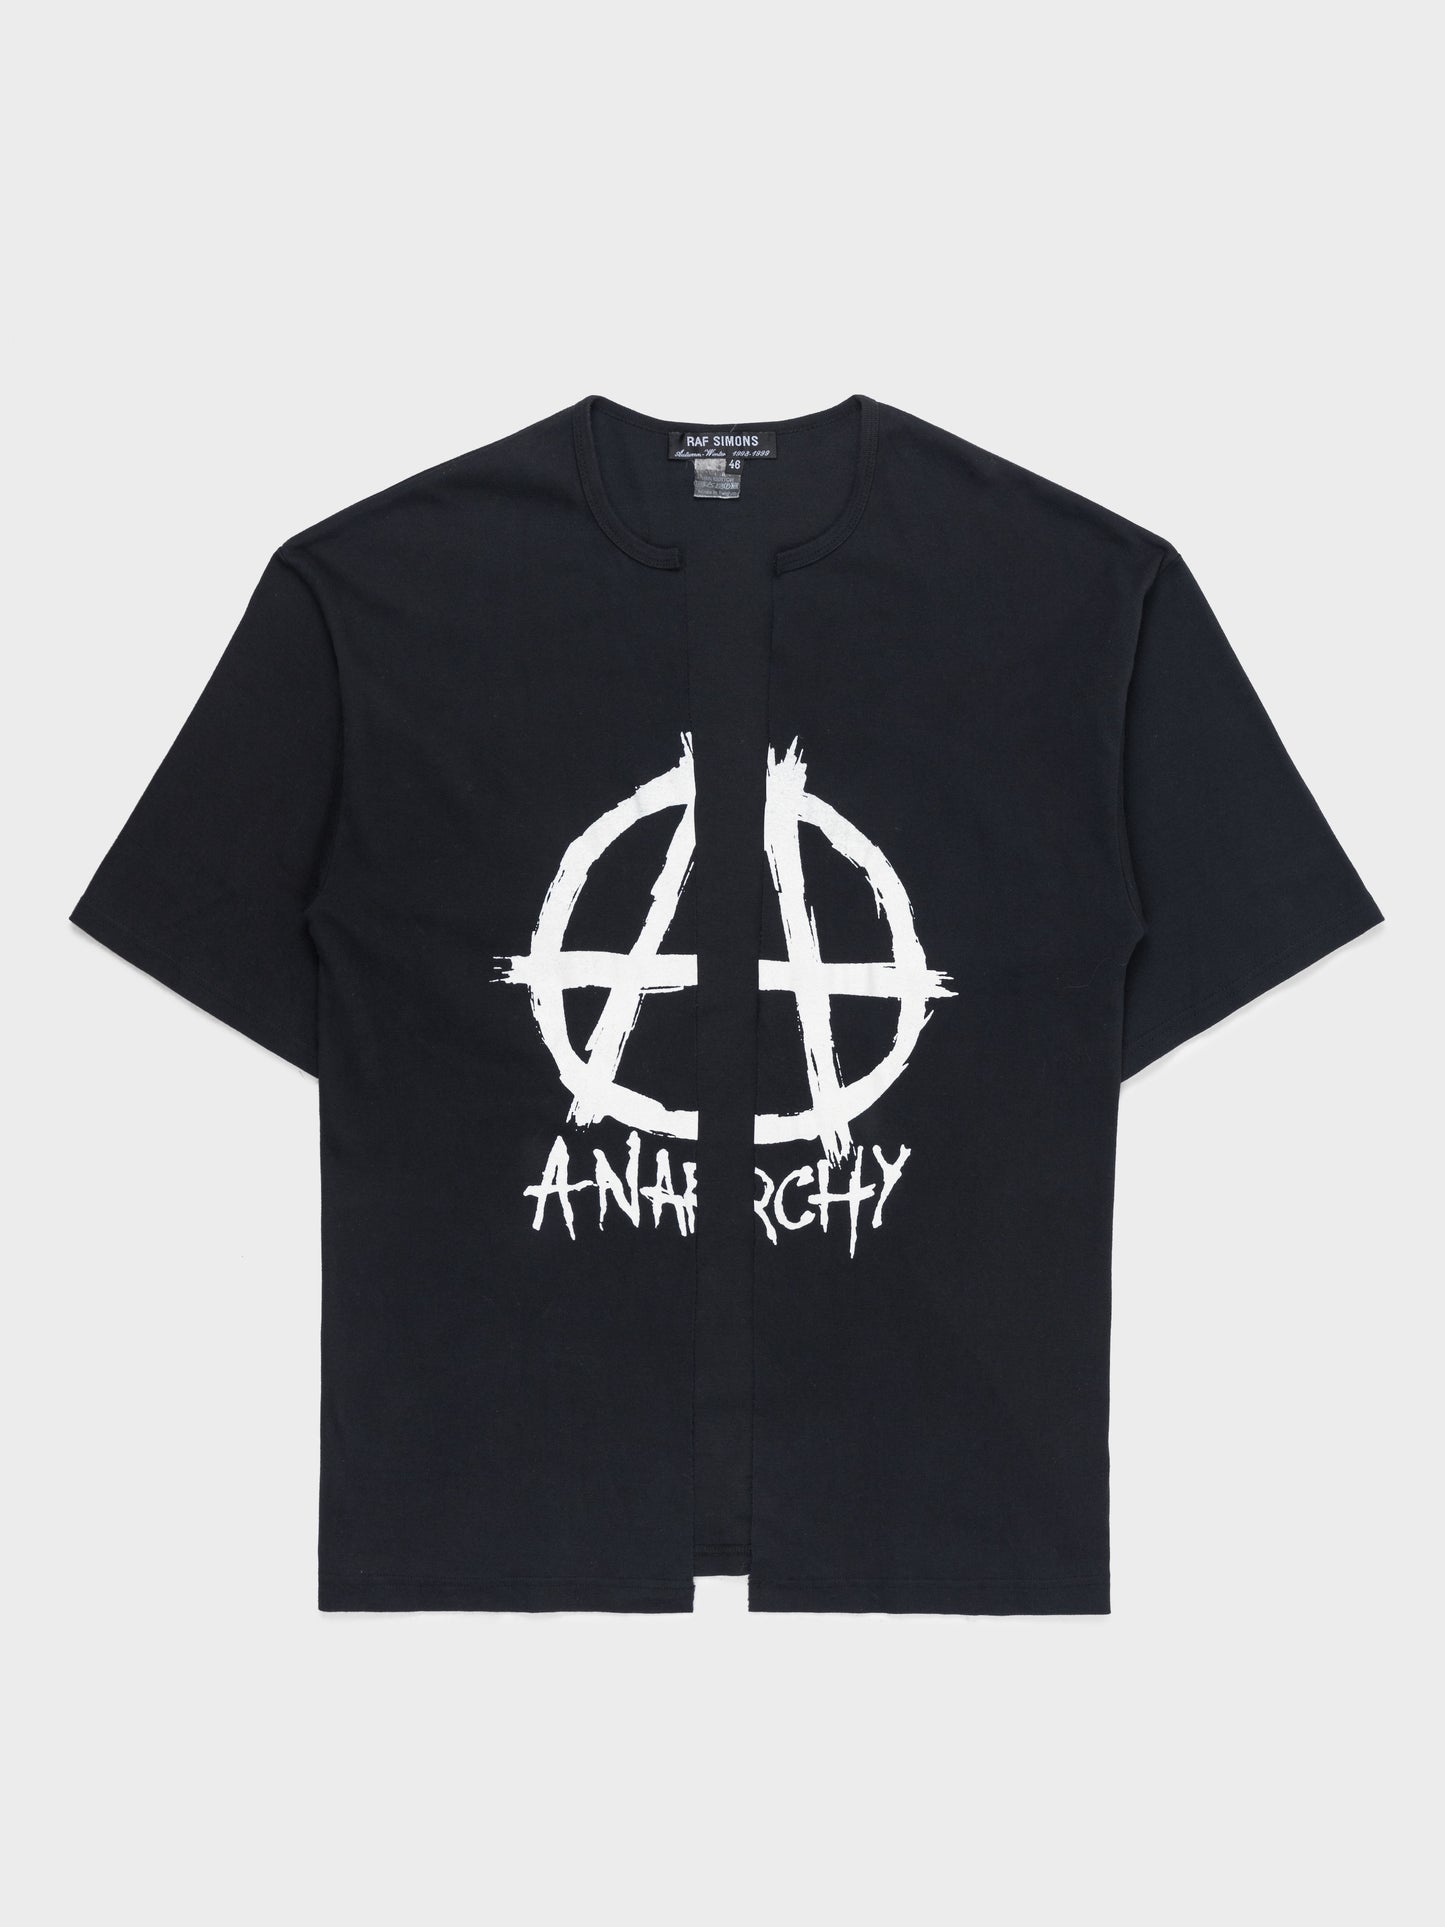 'Radioactivity' Anarchy Split Shirt